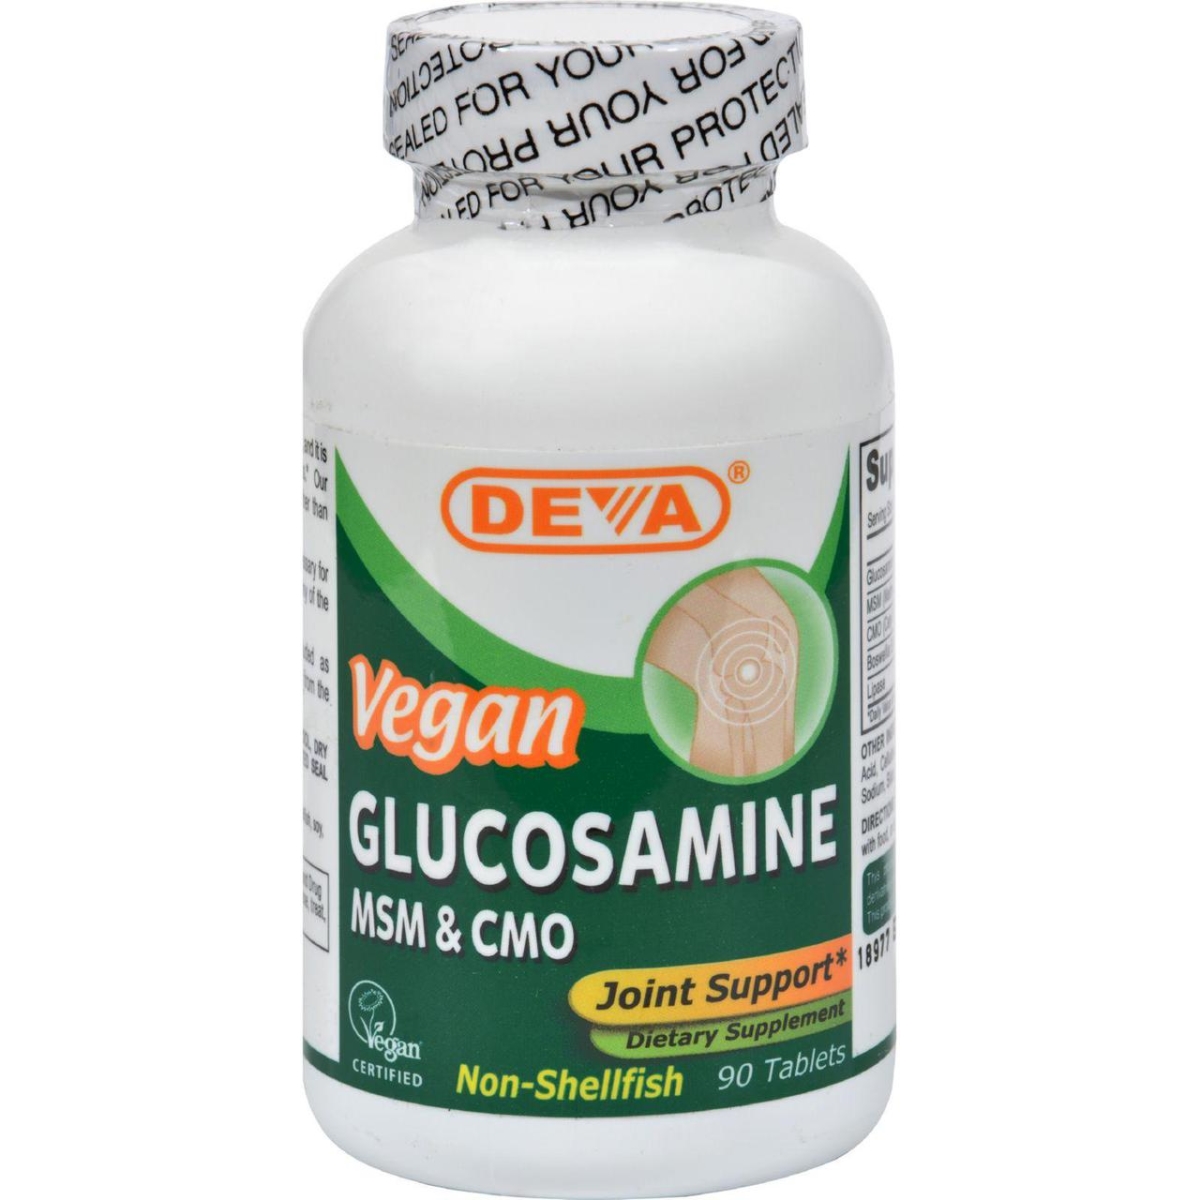 Hg0106823 Glucosamine Msm & Cmo, 90 Tablets